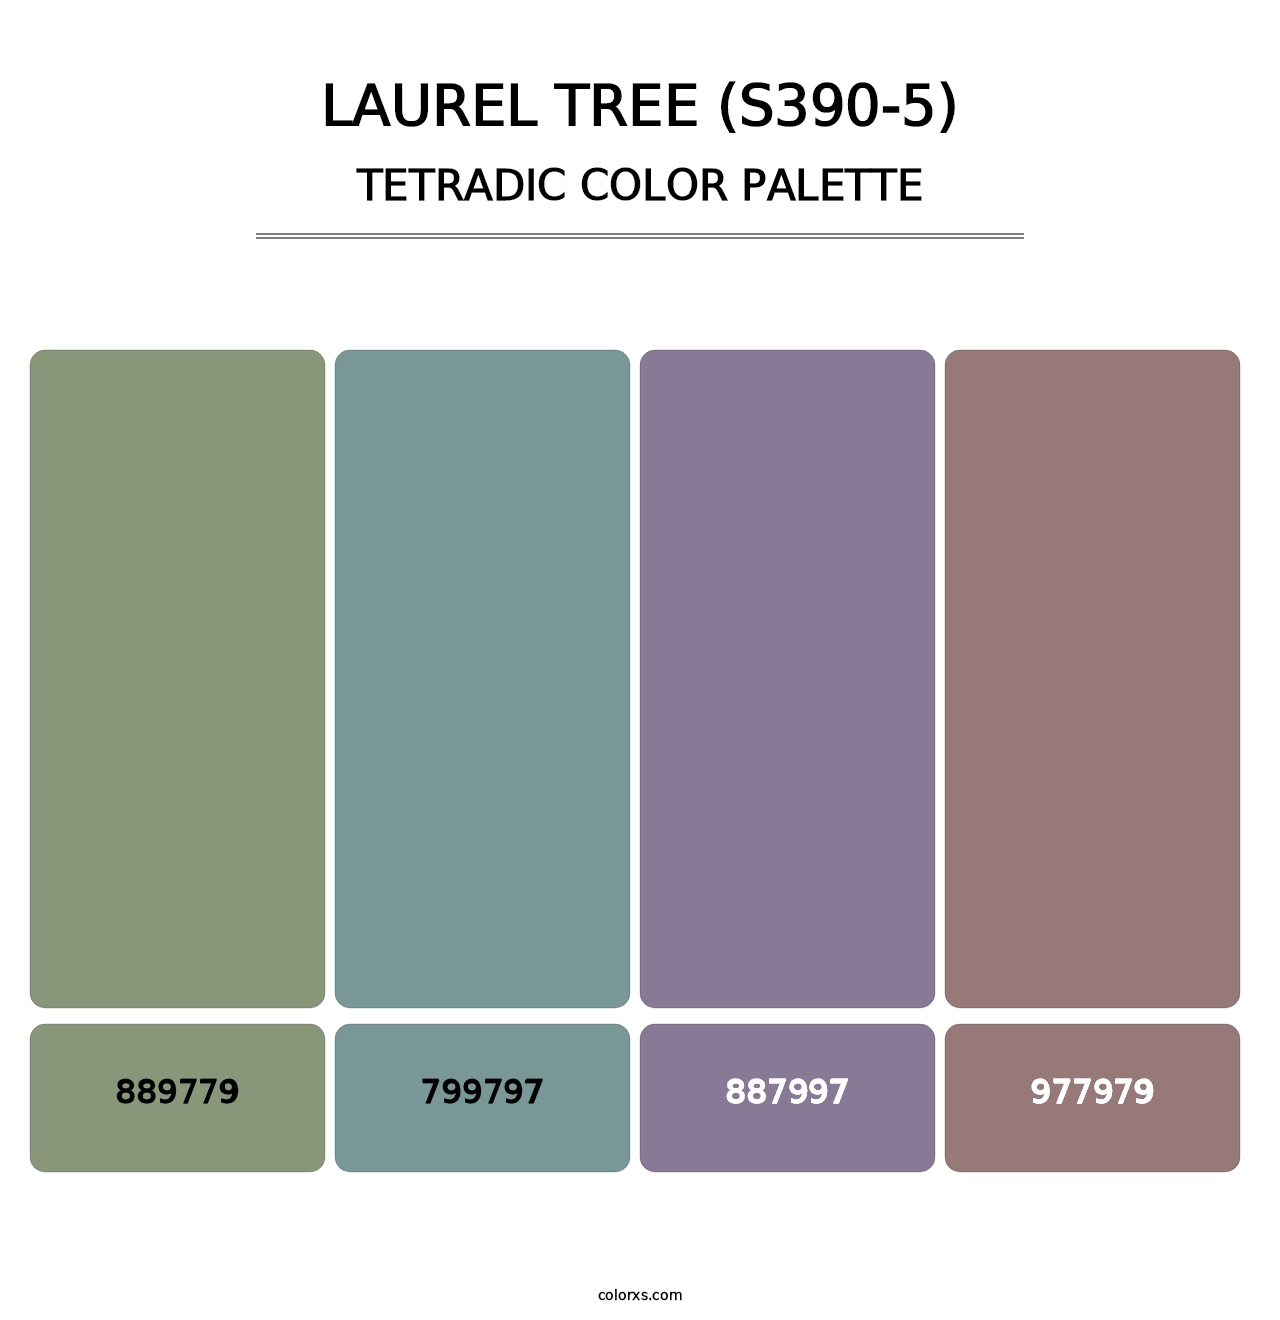 Laurel Tree (S390-5) - Tetradic Color Palette